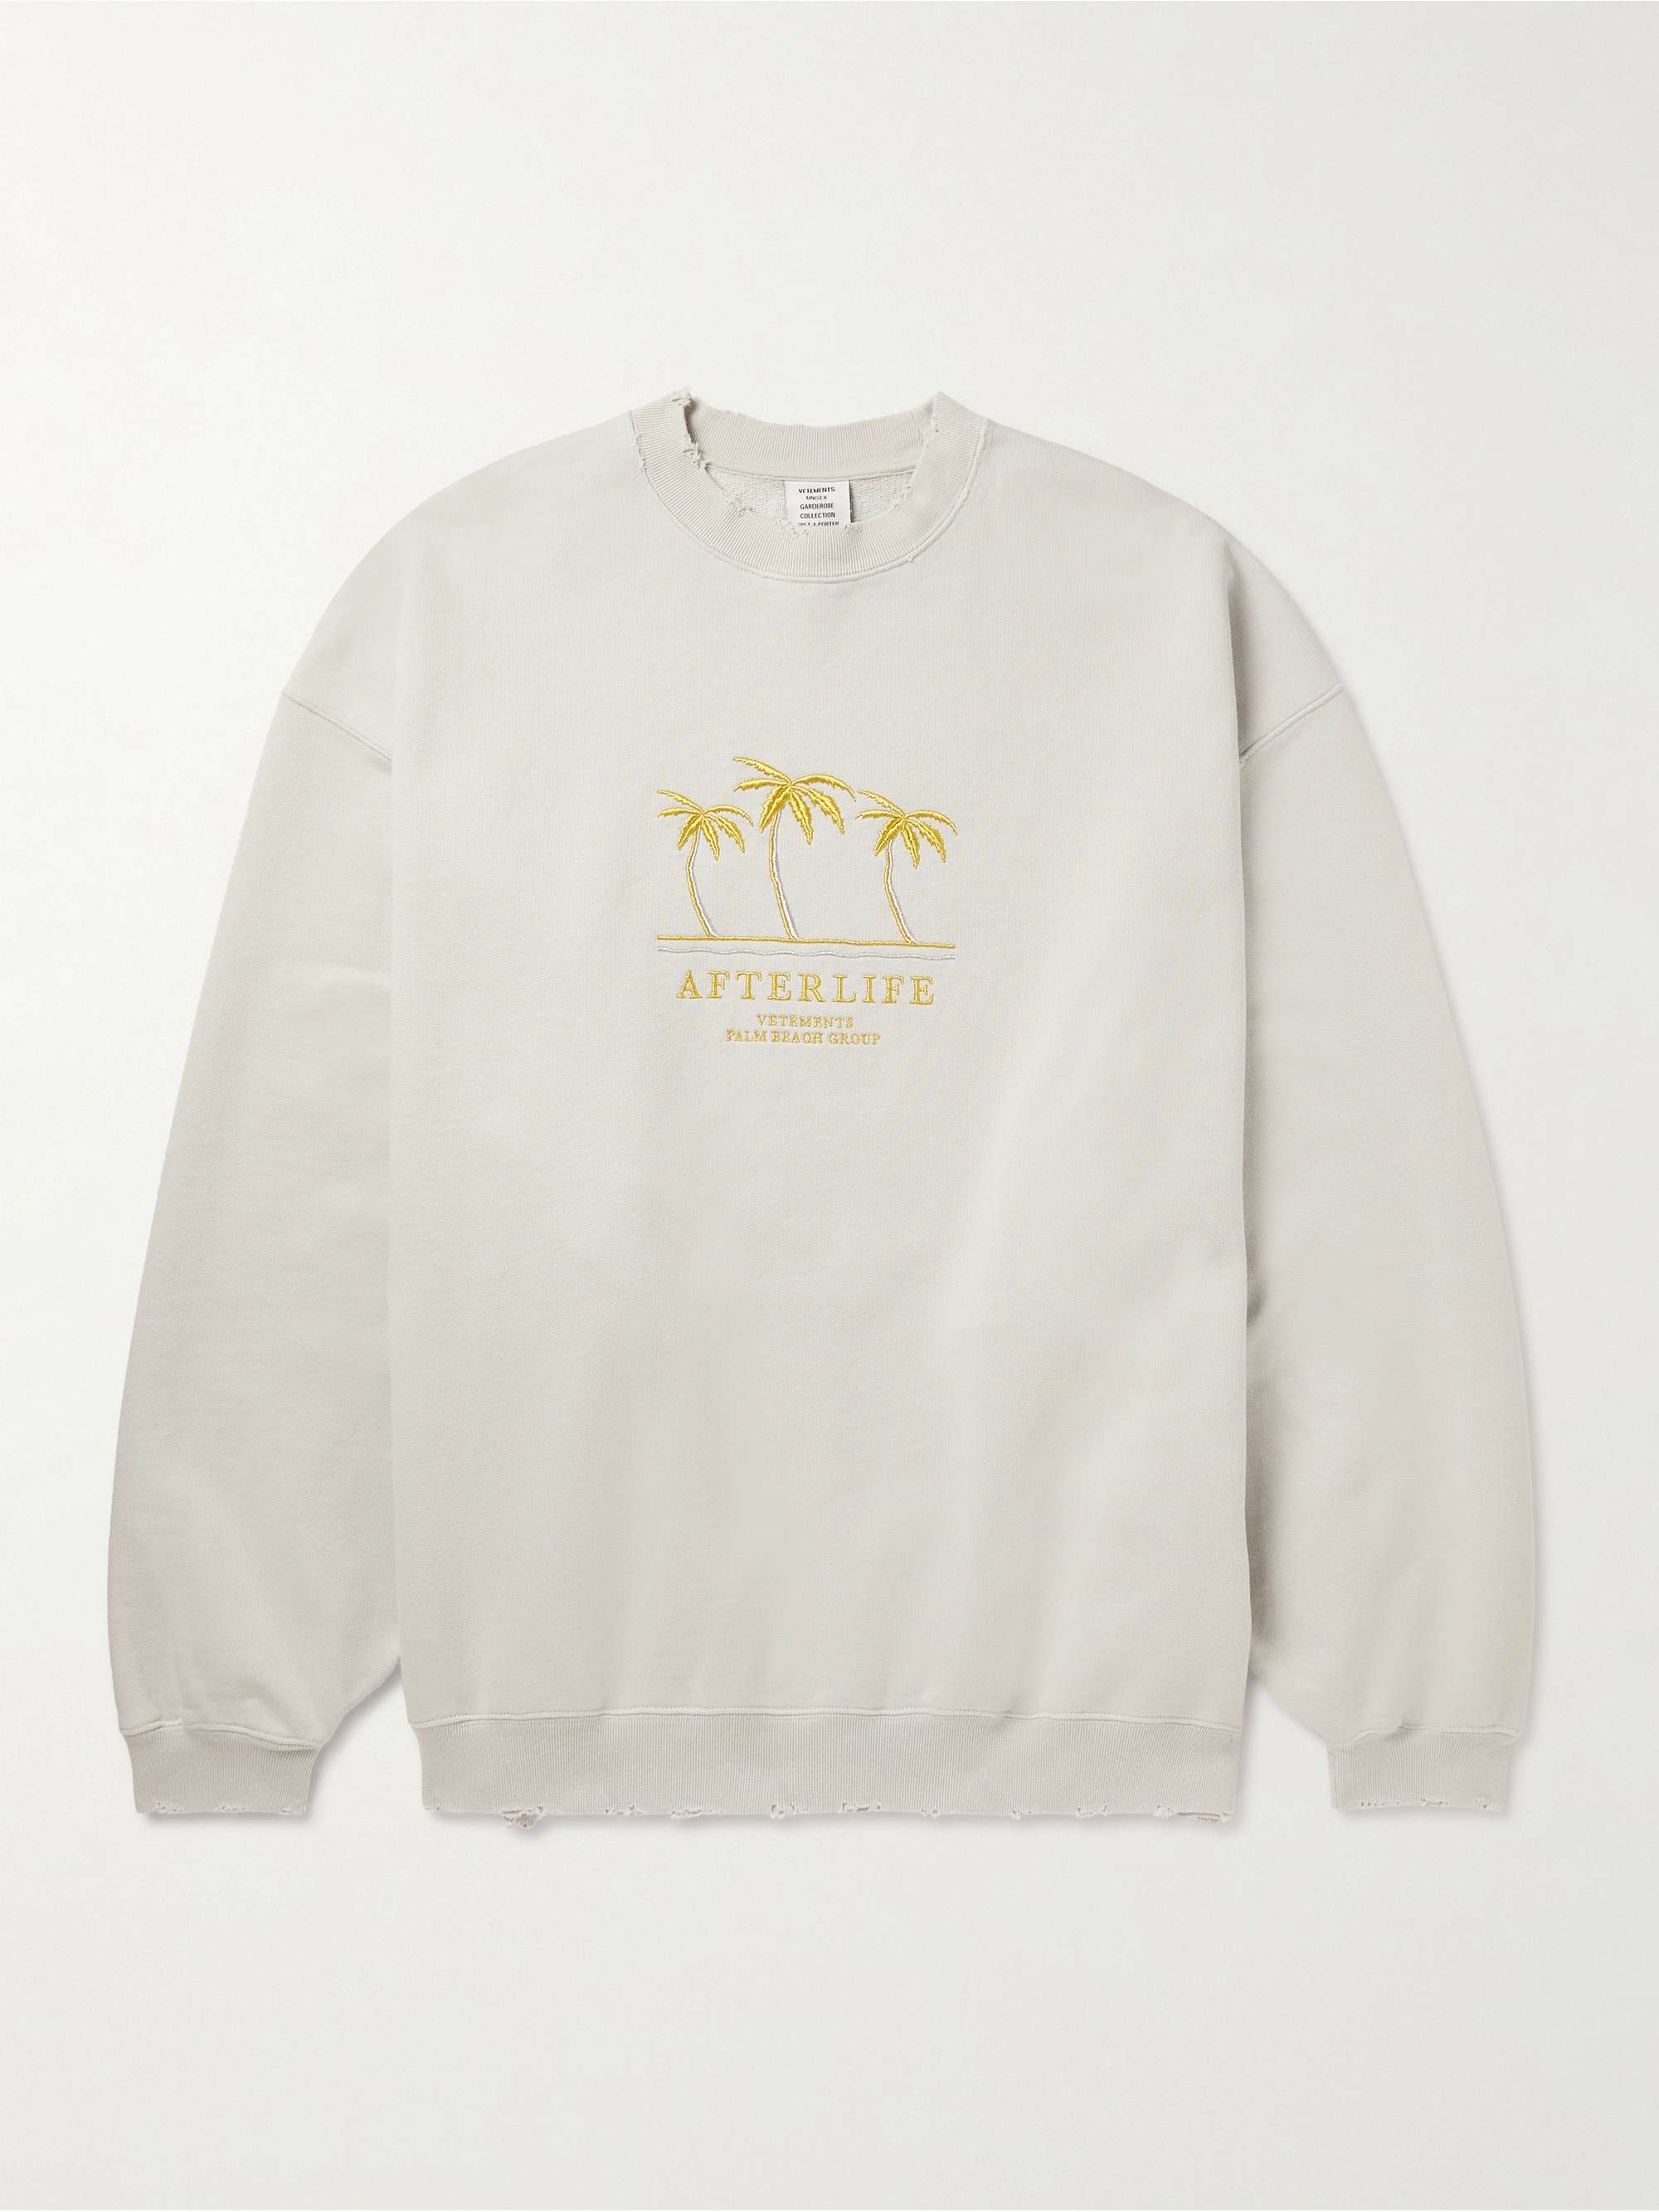 White Oversized Embroidered Distressed Cotton-Blend Jersey Sweatshirt |  VETEMENTS | MR PORTER